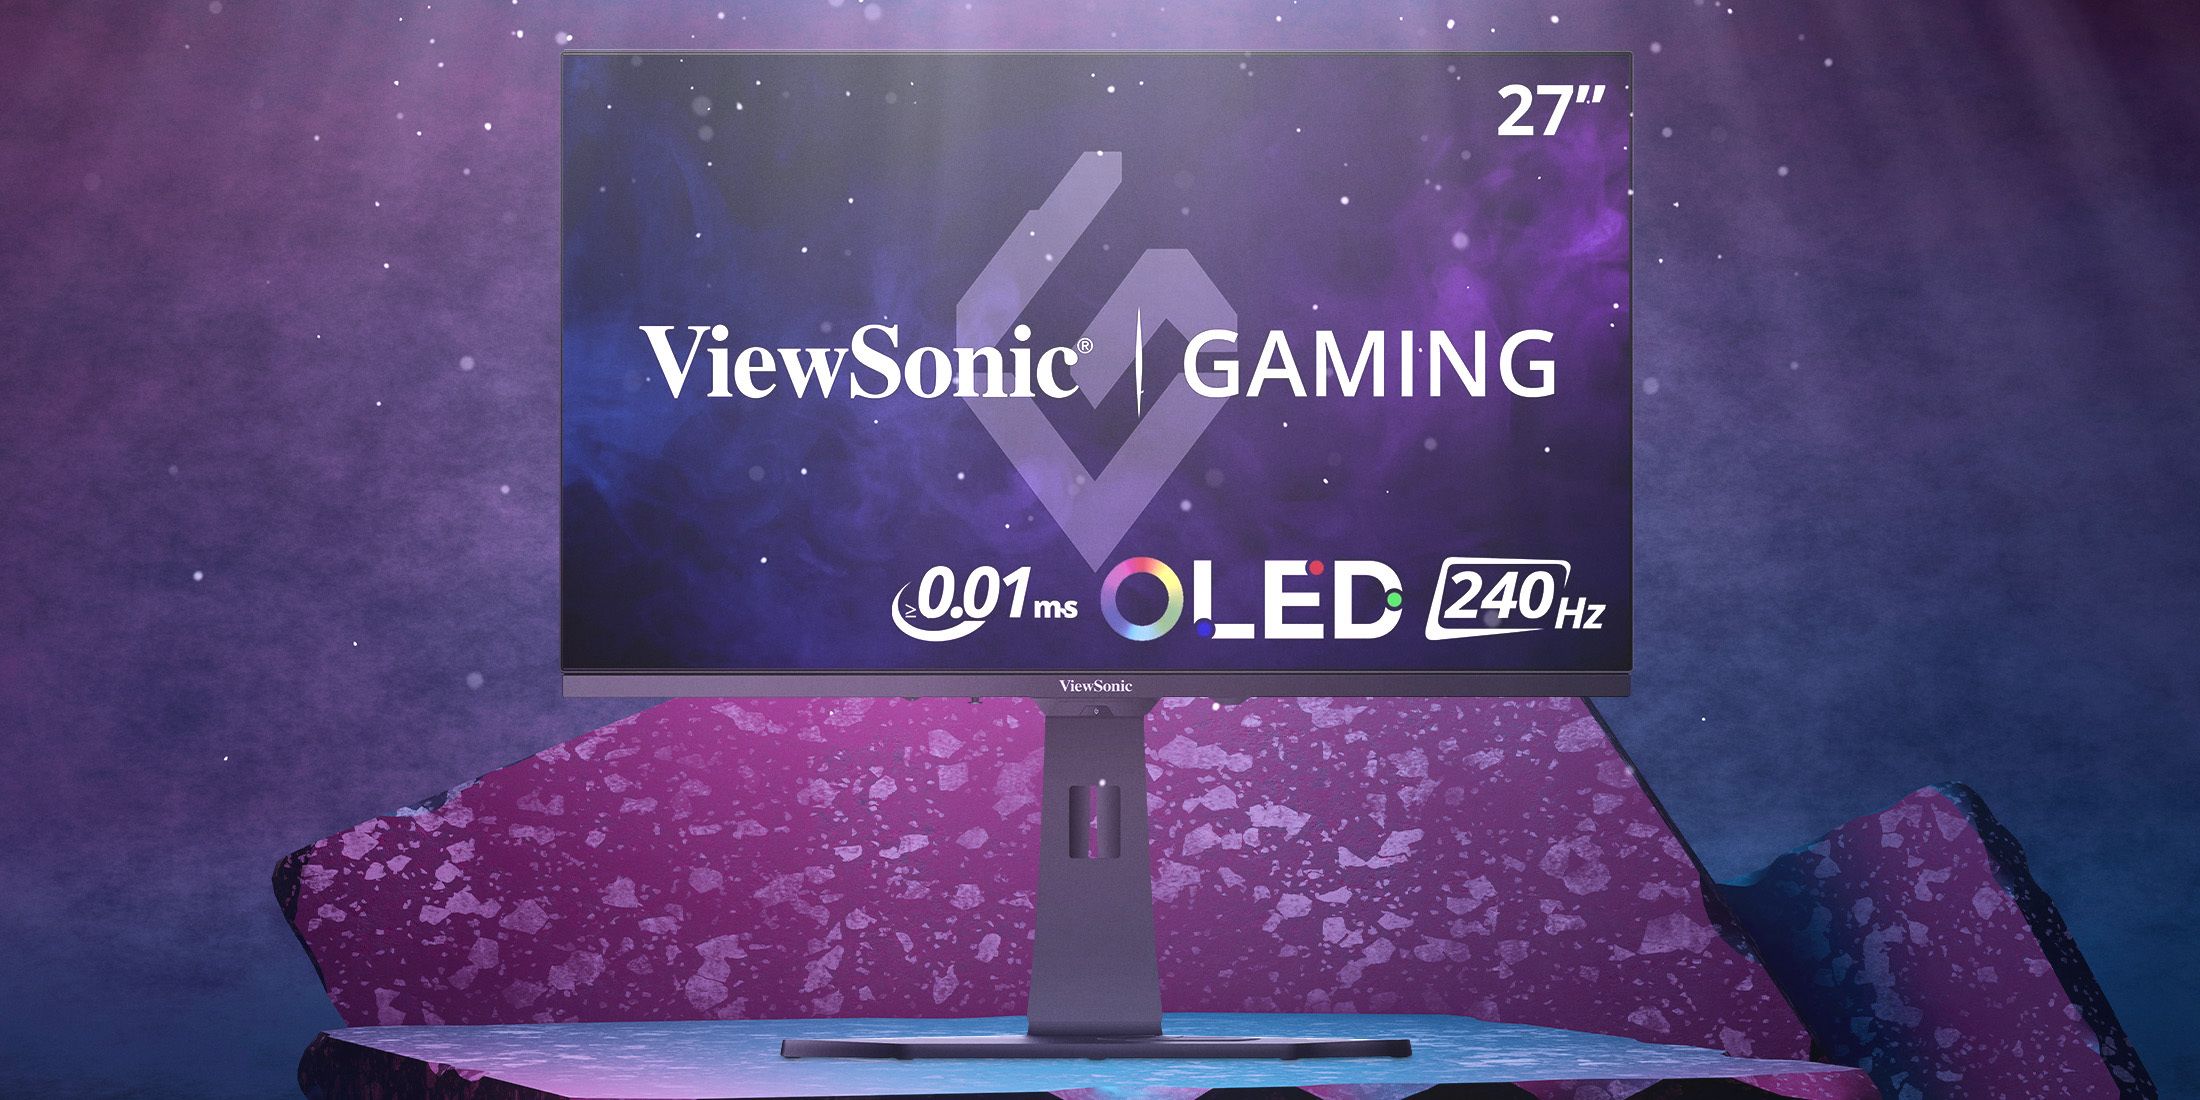 viewsonic gaming monitor